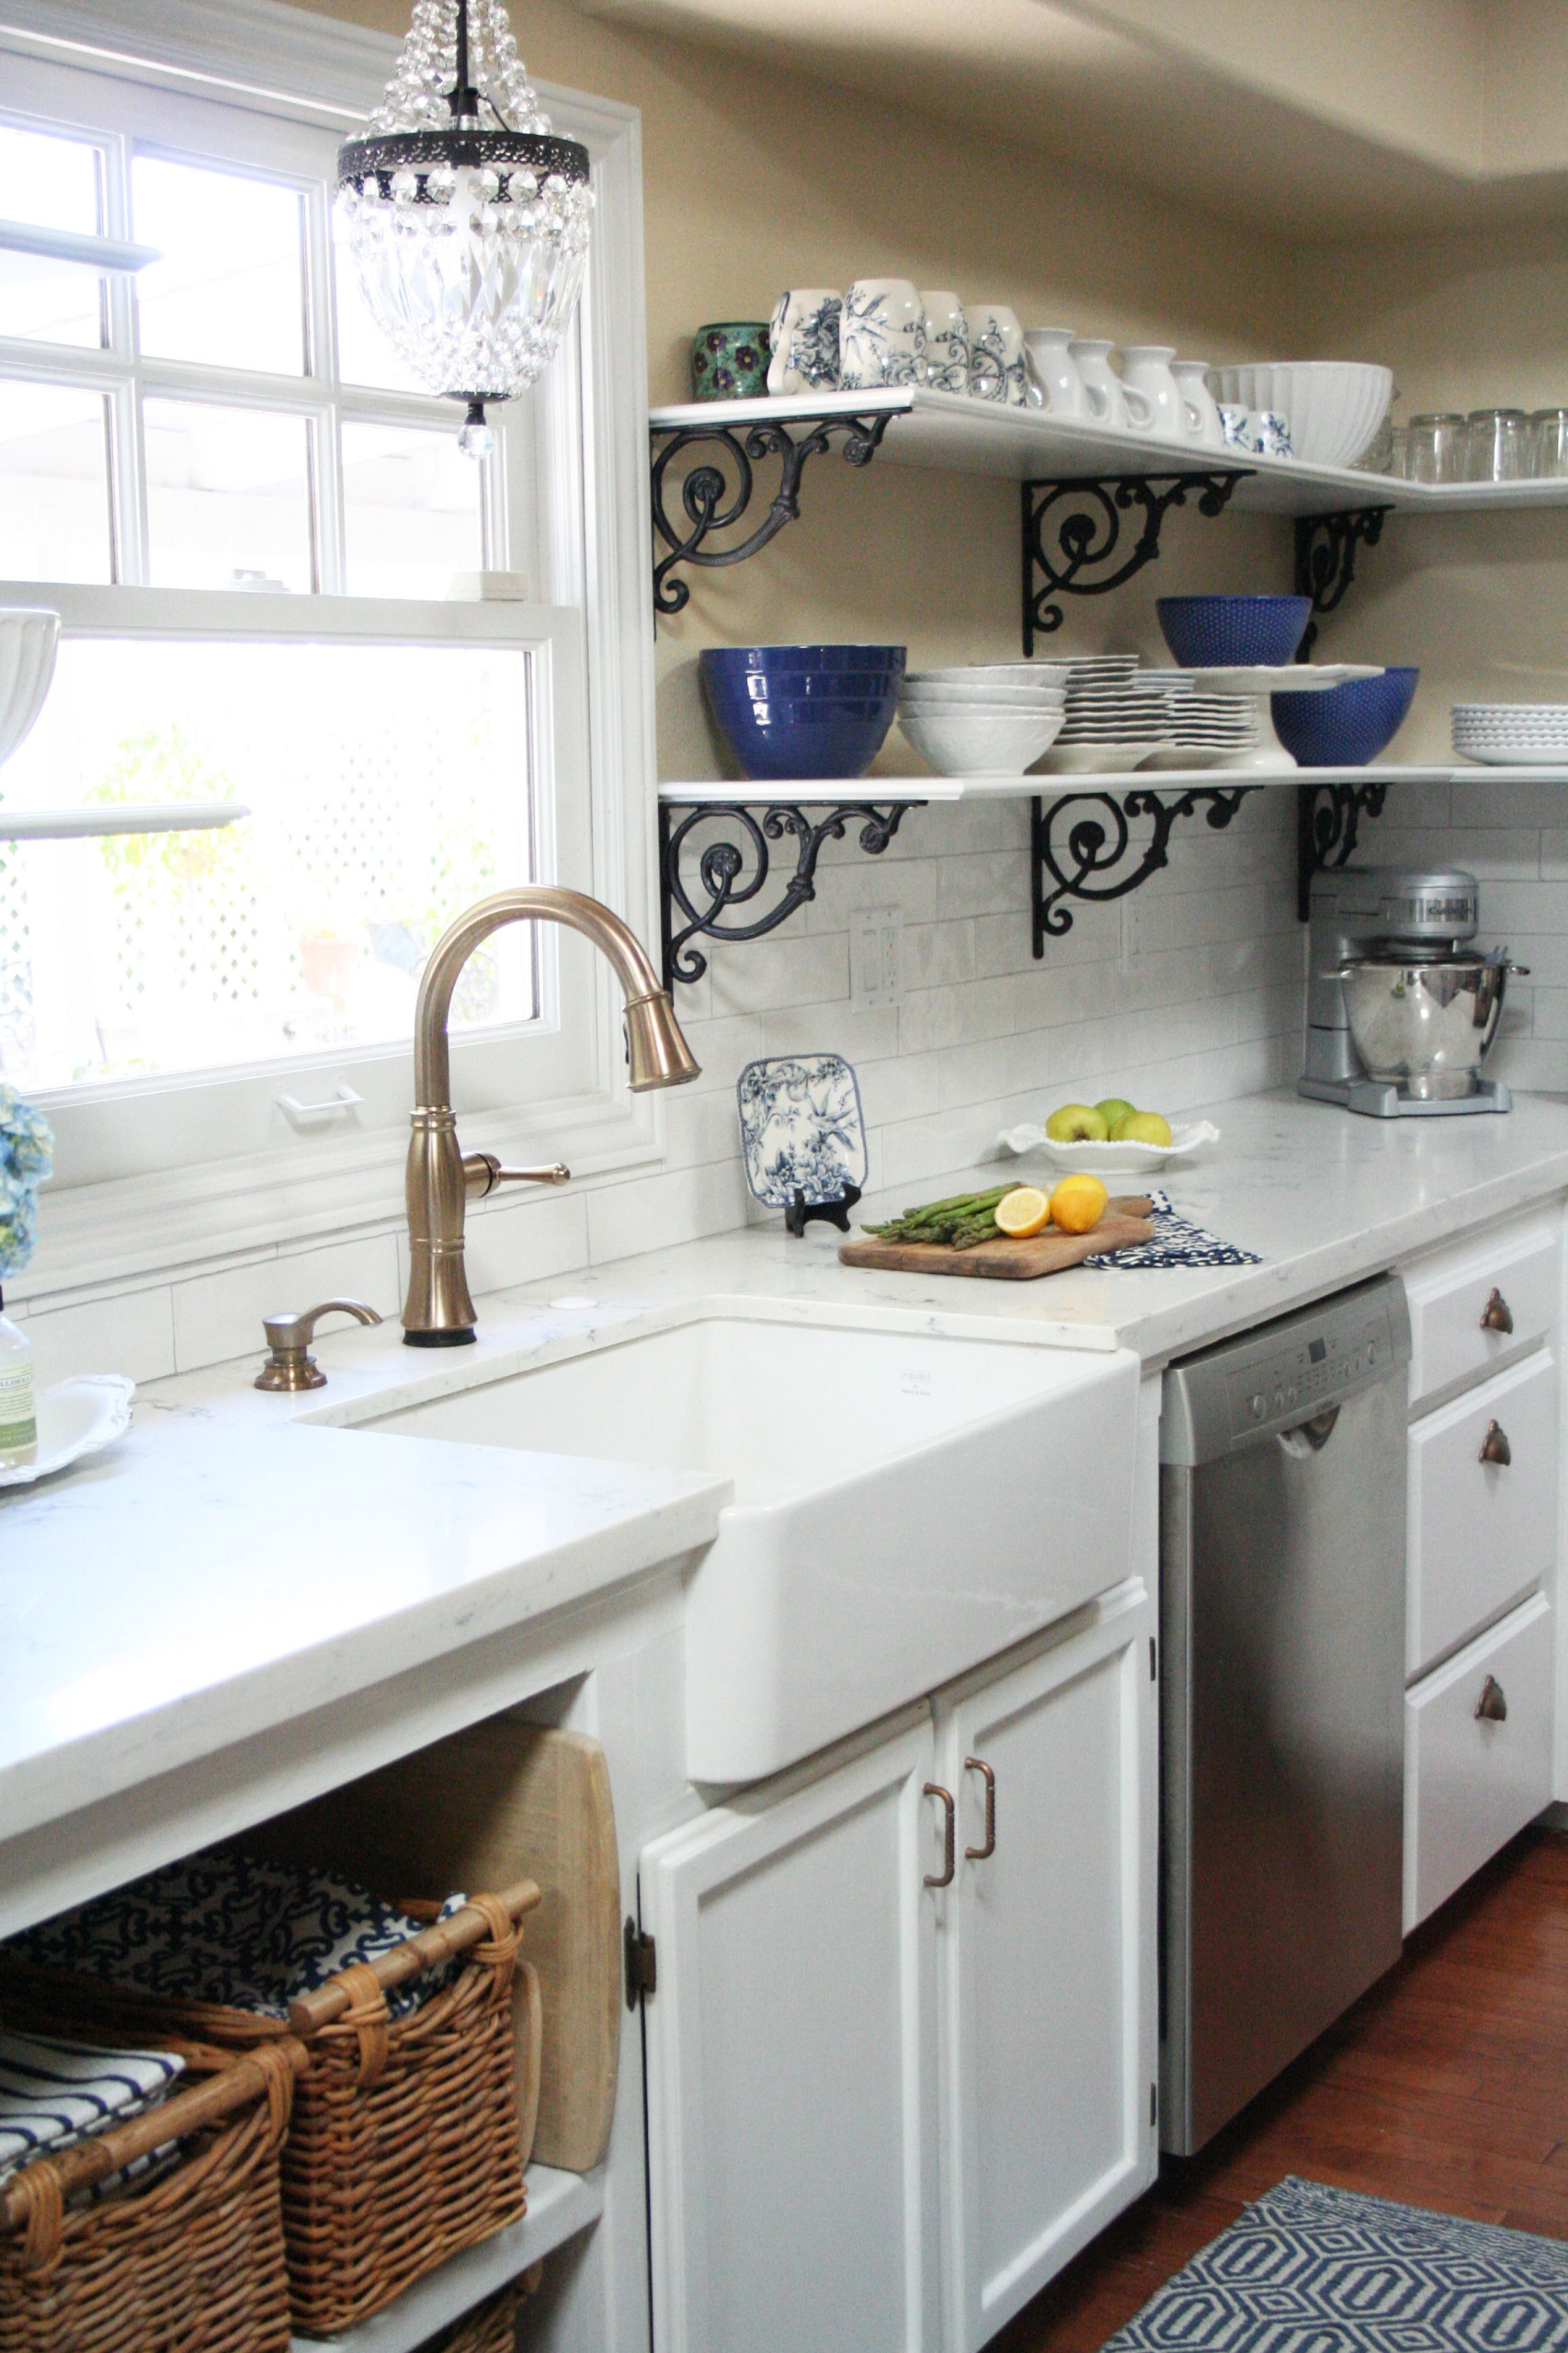 https://foter.com/photos/424/nostalgic-kitchen-with-decorative-shelves.jpg